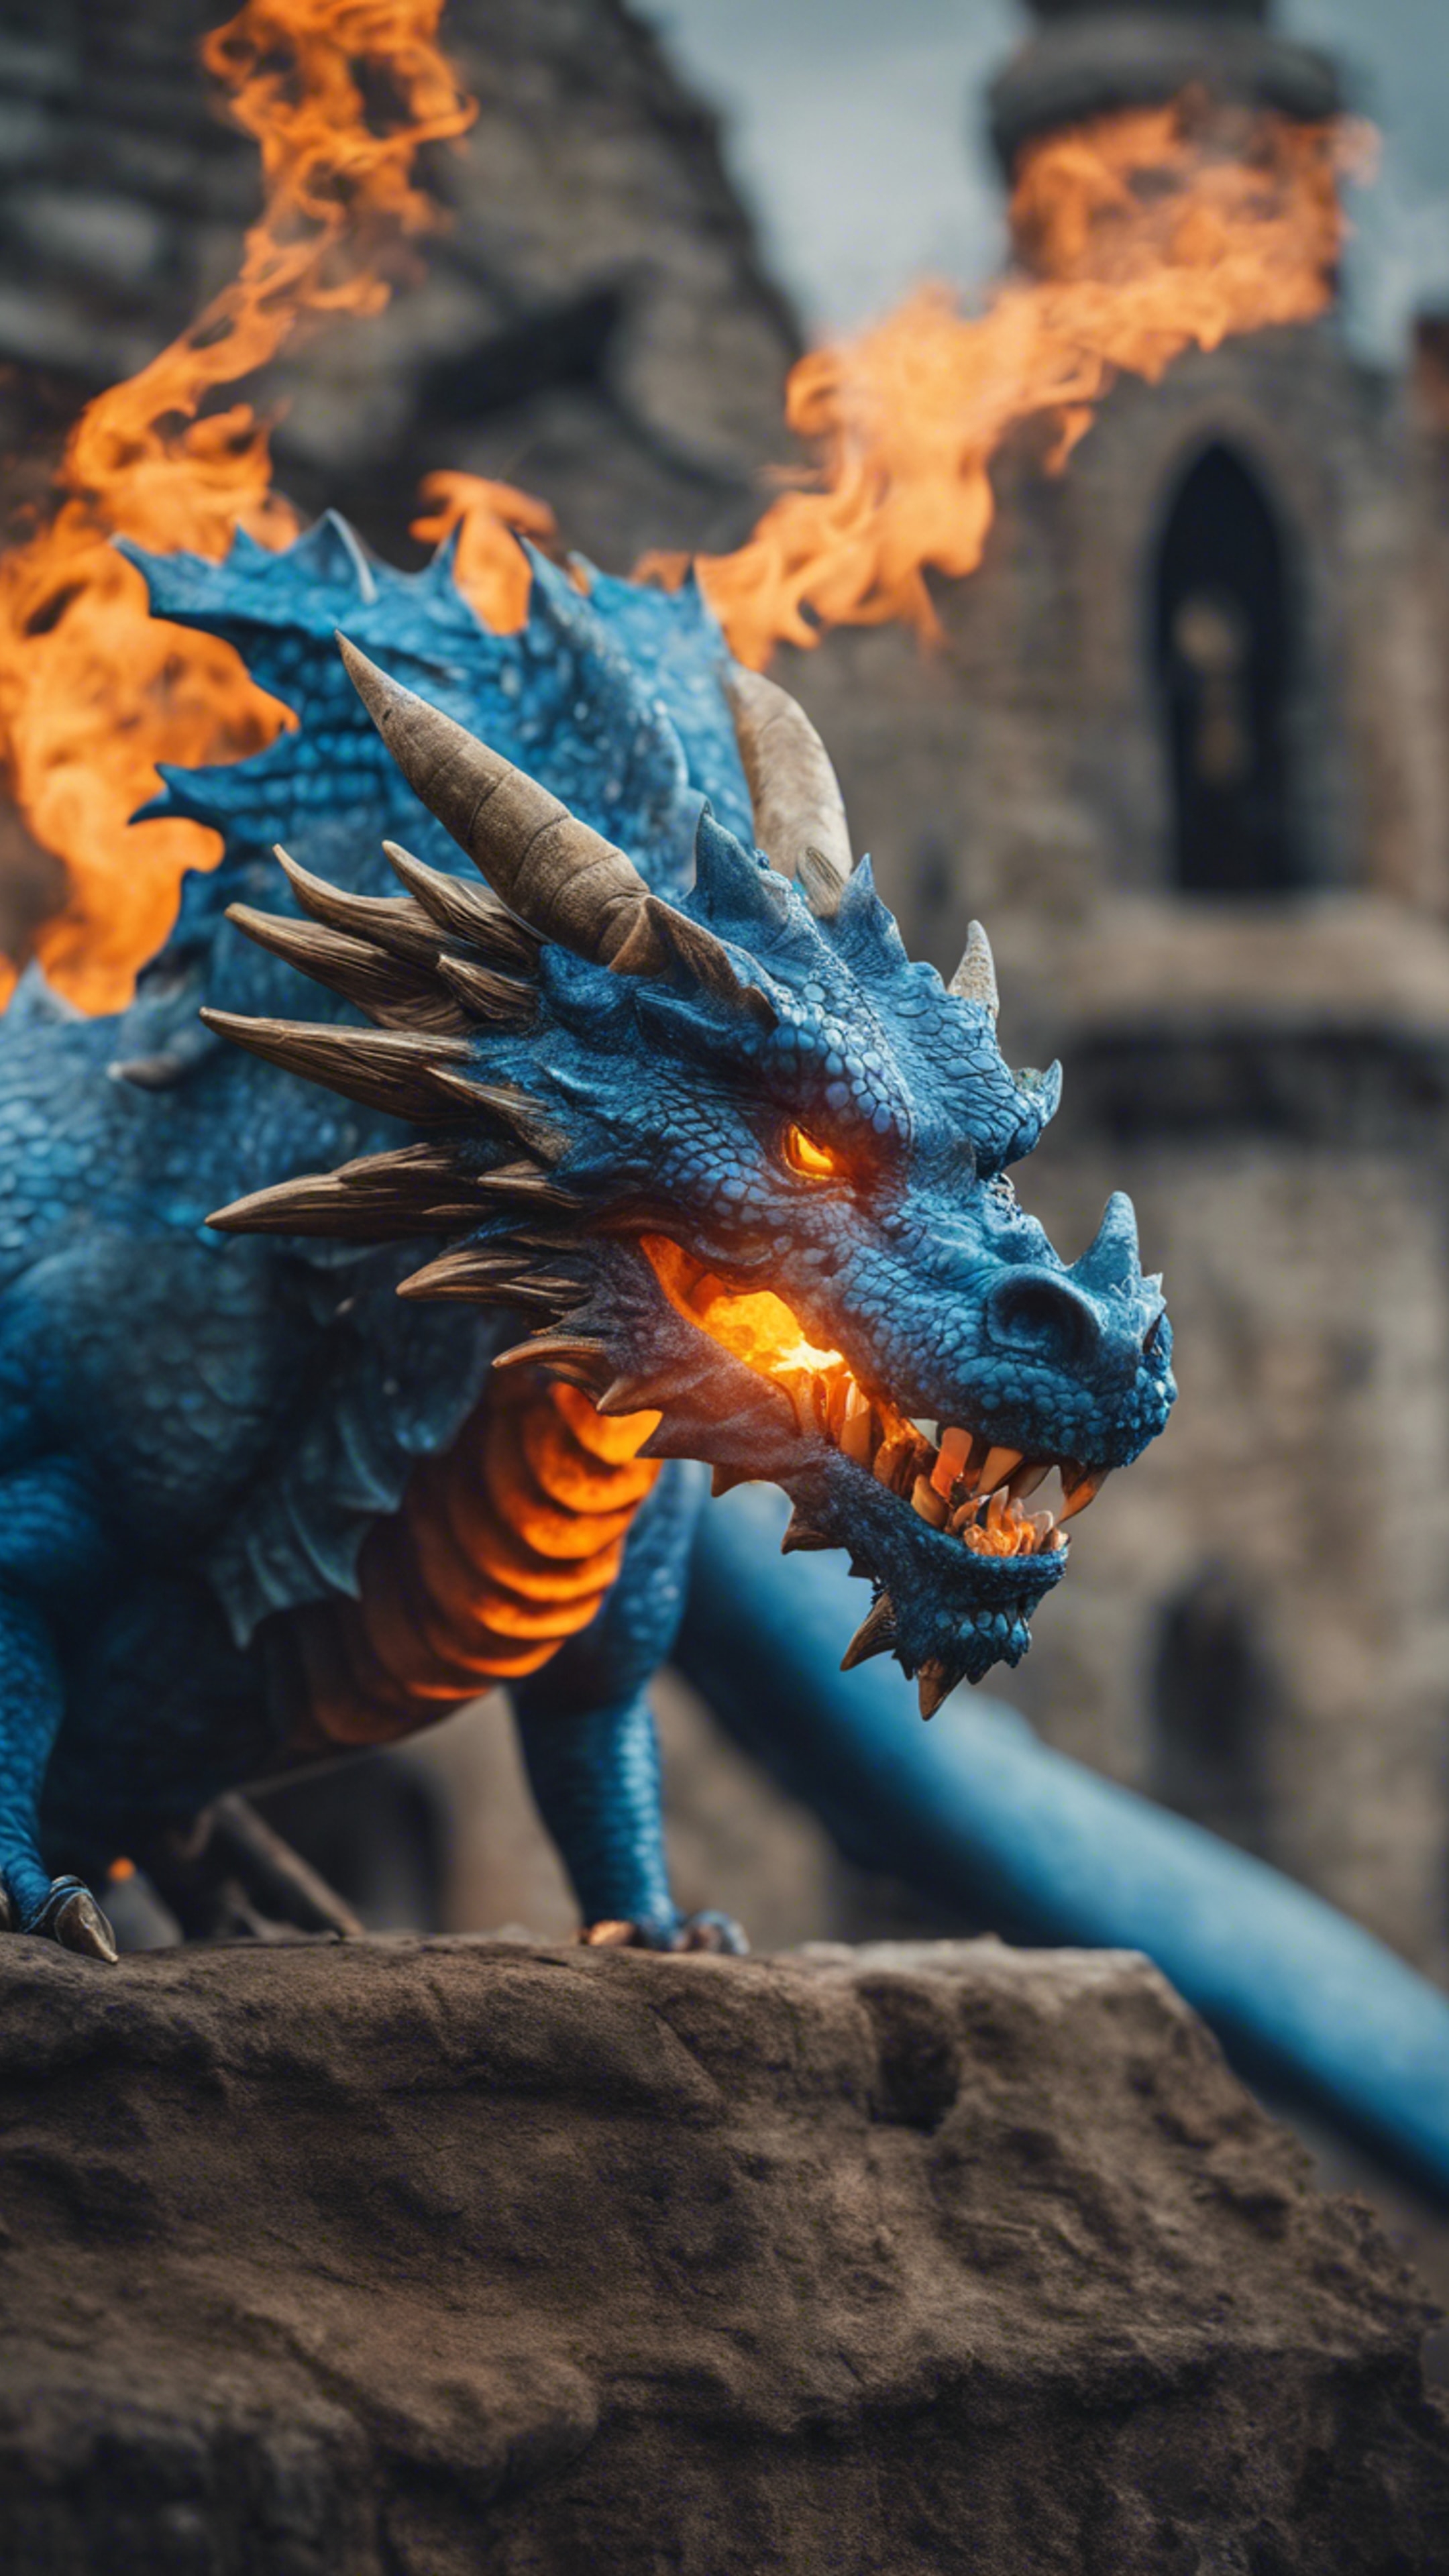 A cool blue dragon breathing orange flames in a medieval setting.壁紙[c13f942b155b47e1b67b]